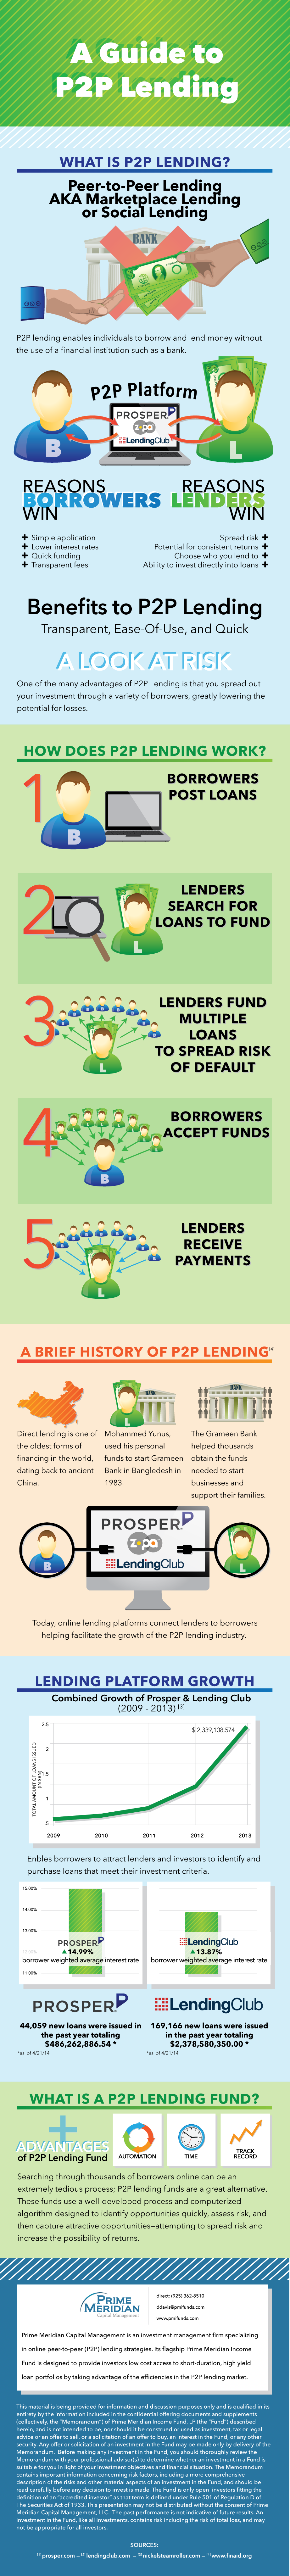 PMI Peer to peer lending infographic